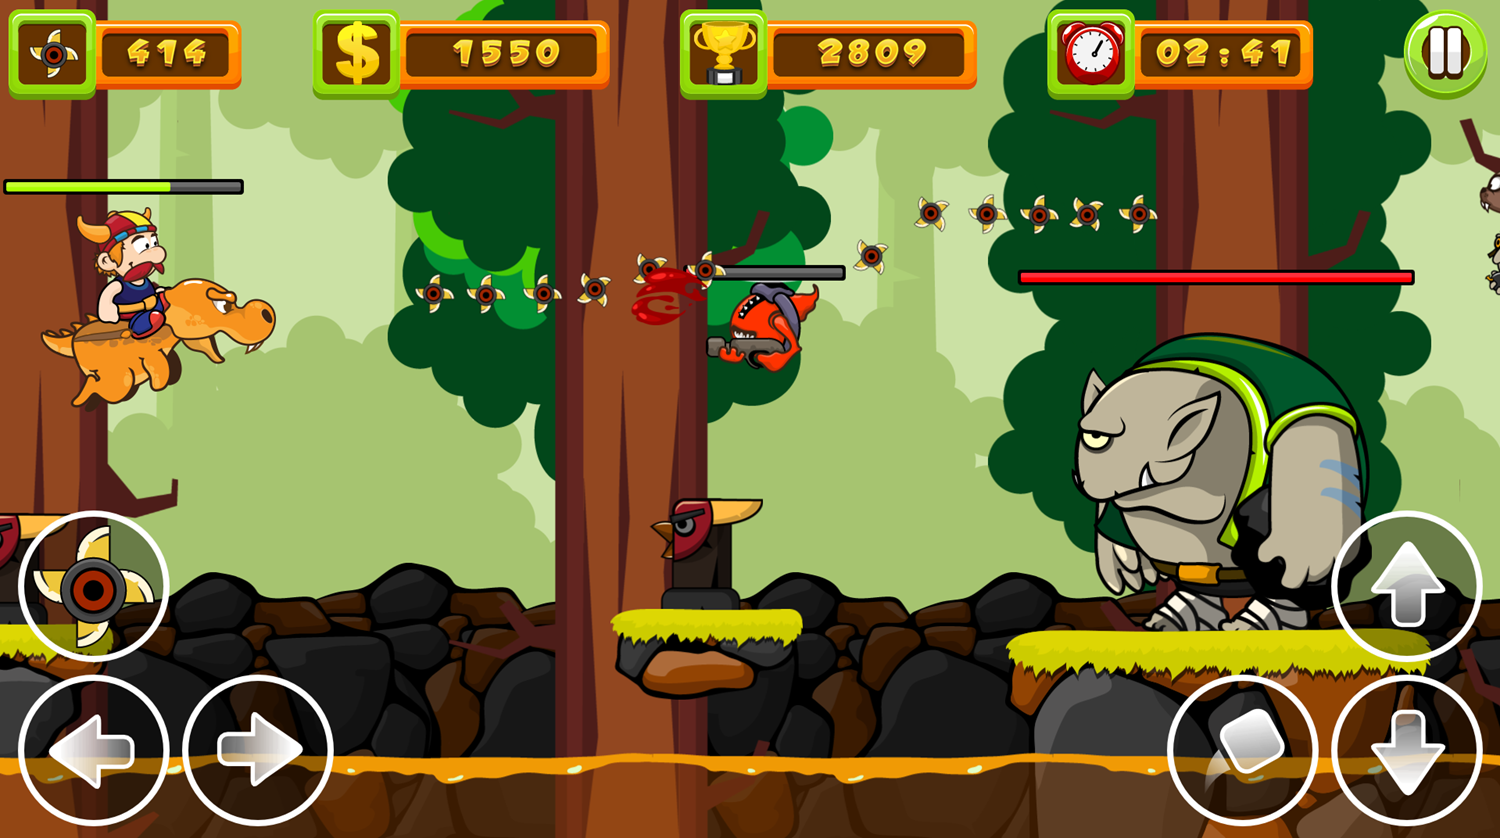 Viking Escape Game Game Play Screenshot.